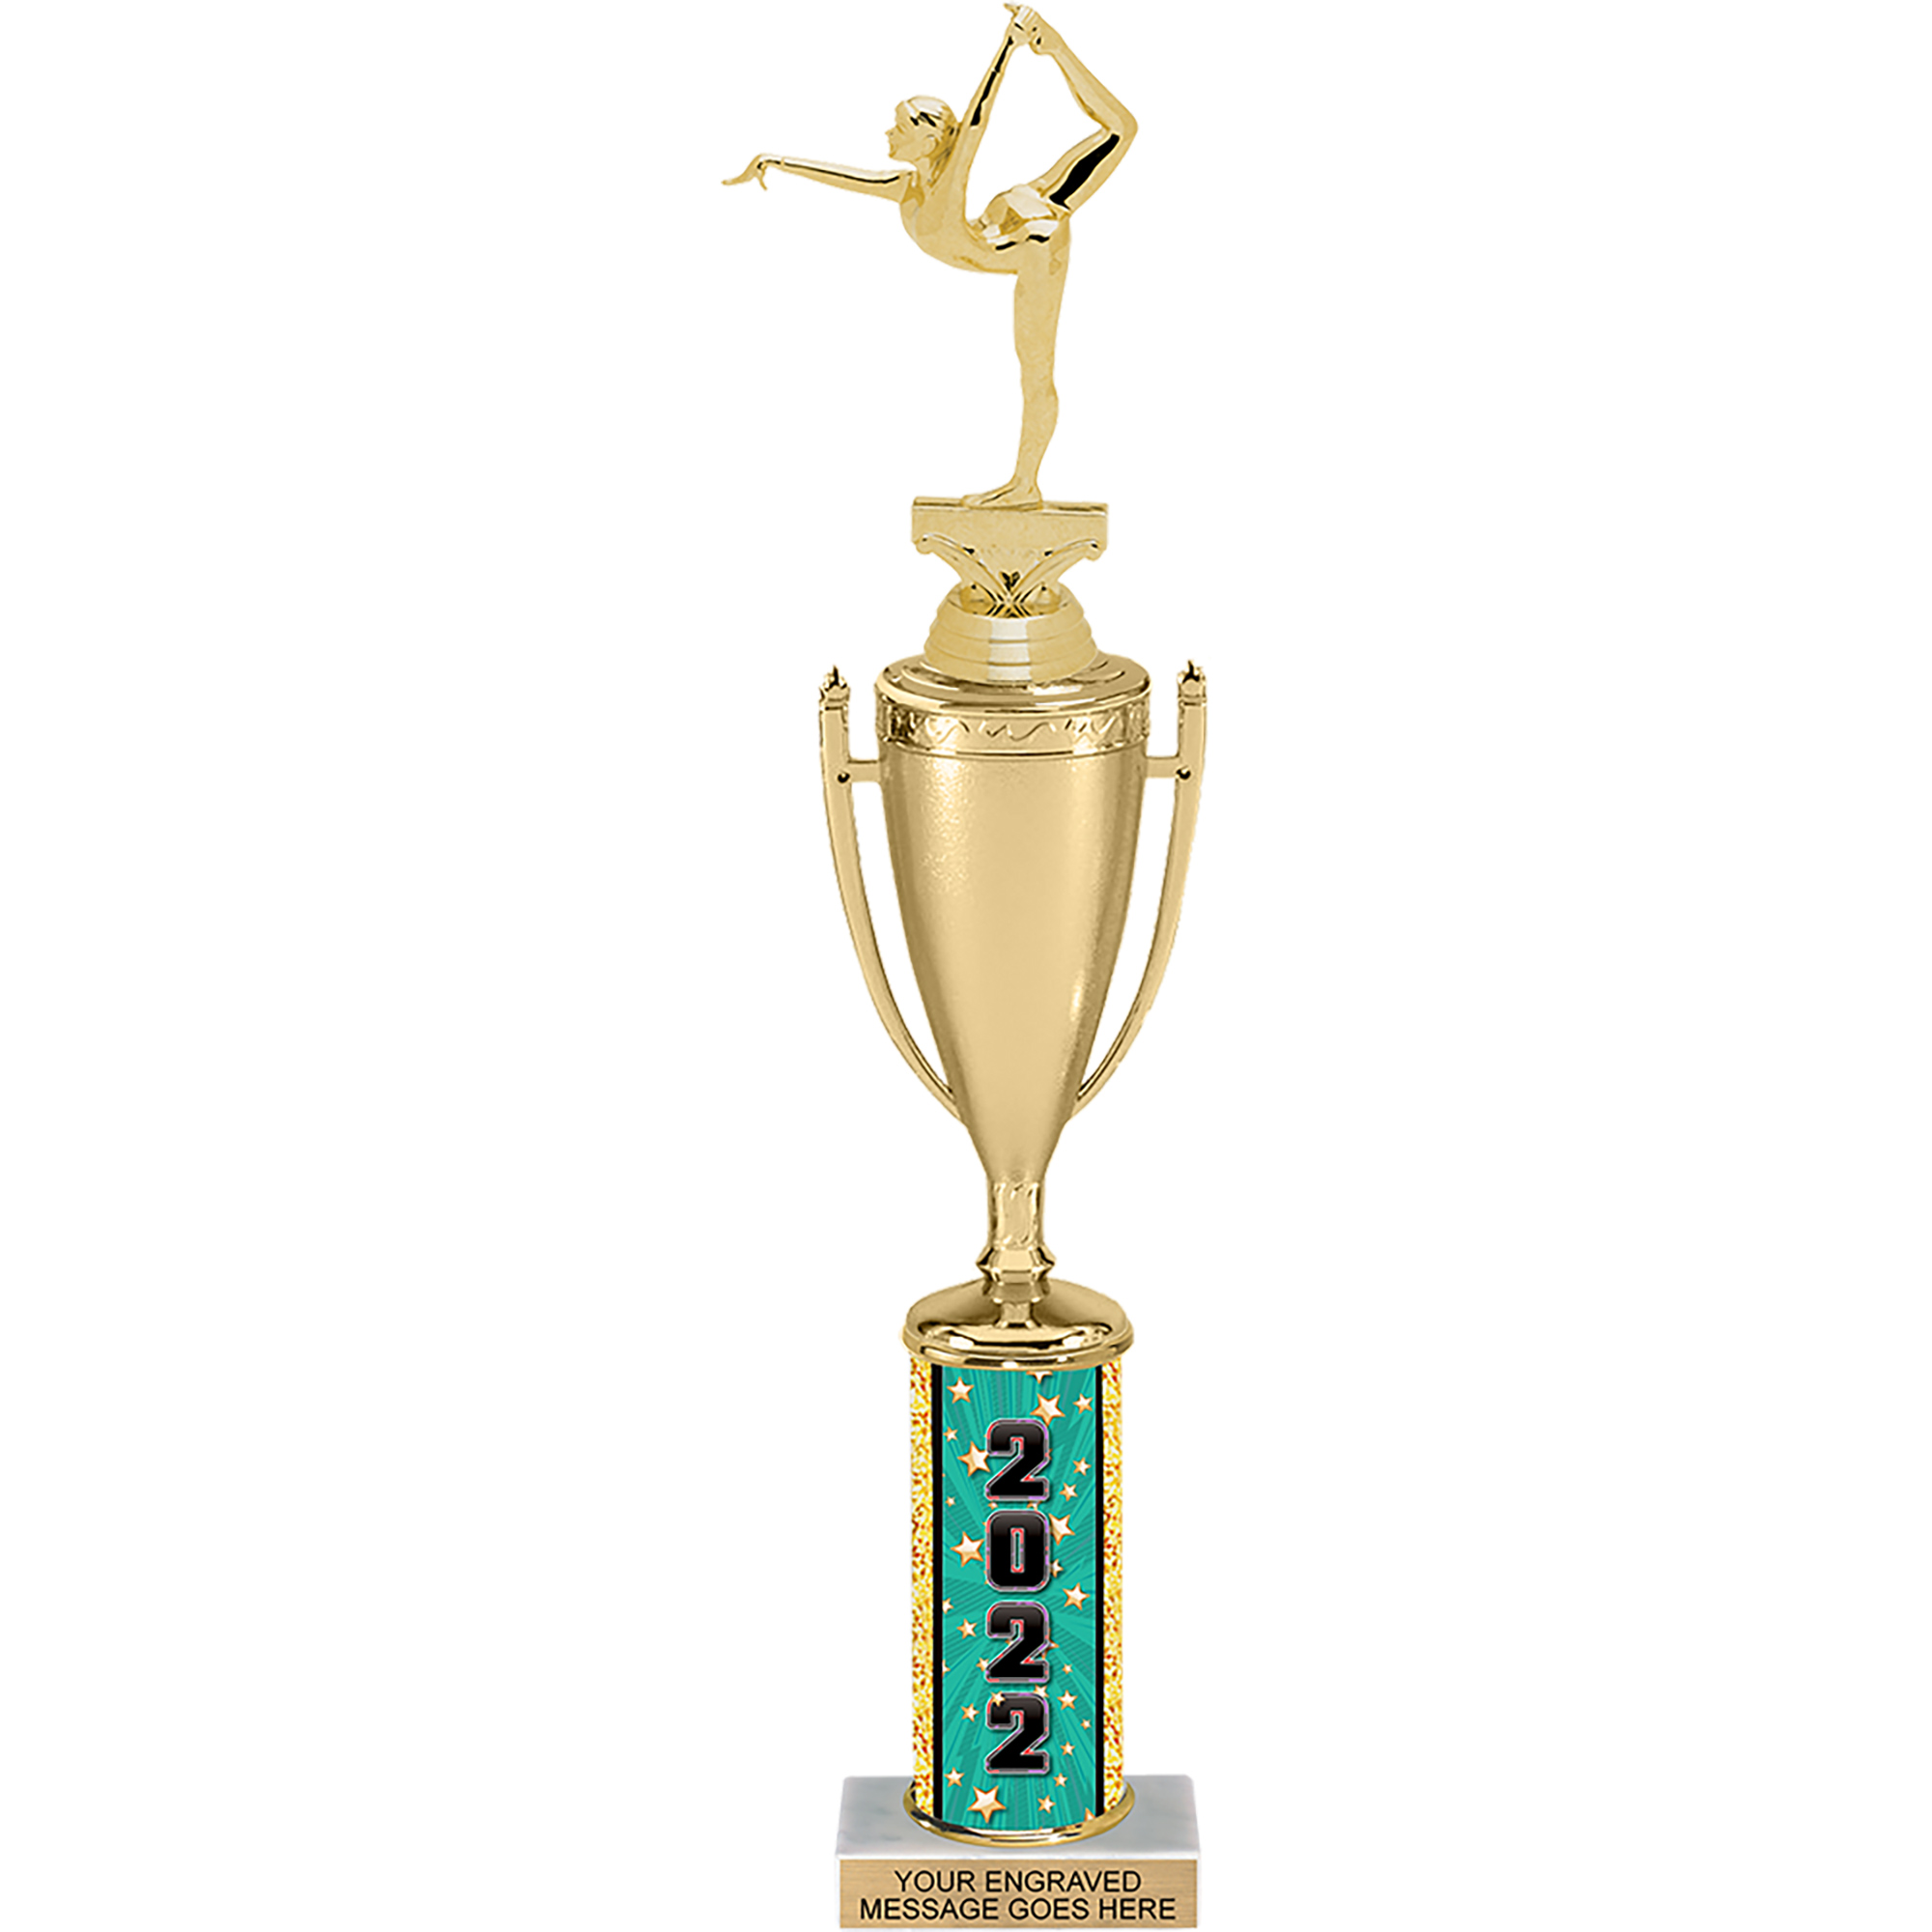 2022 Comic Stars Column Cup Trophy - 15 inch